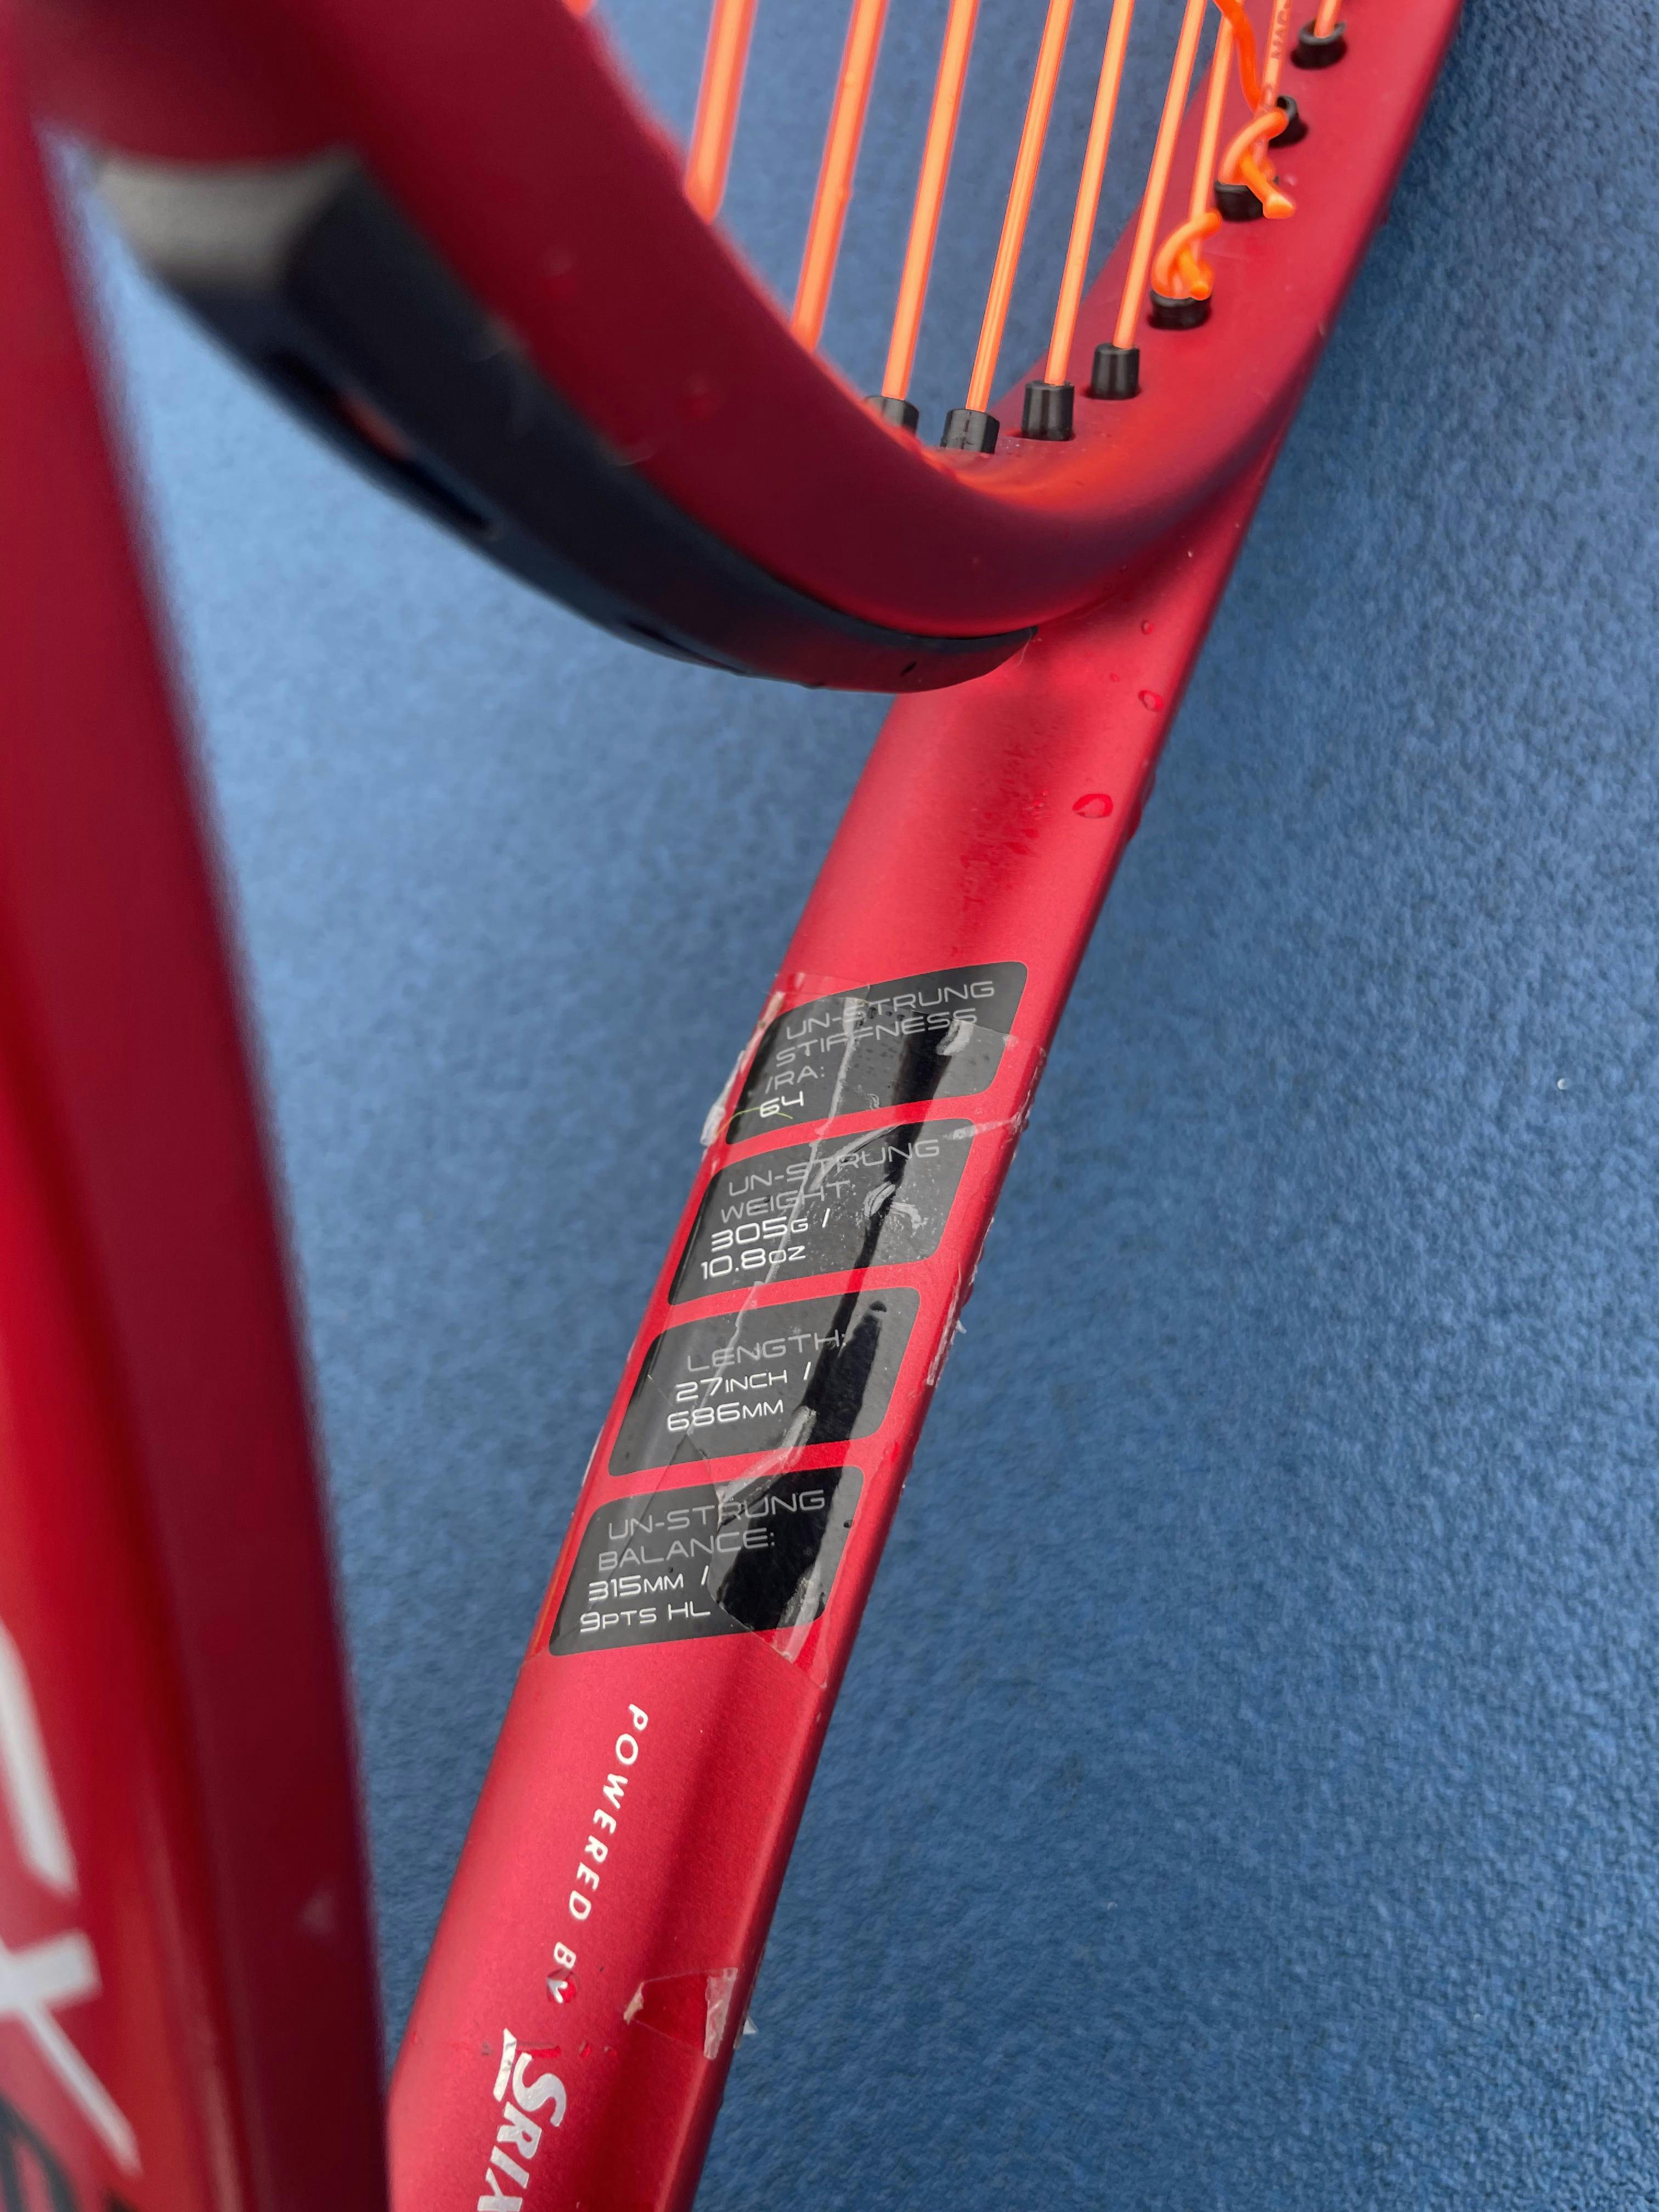 Details on the Dunlop CX 200 98 Racquet · Unstrung.